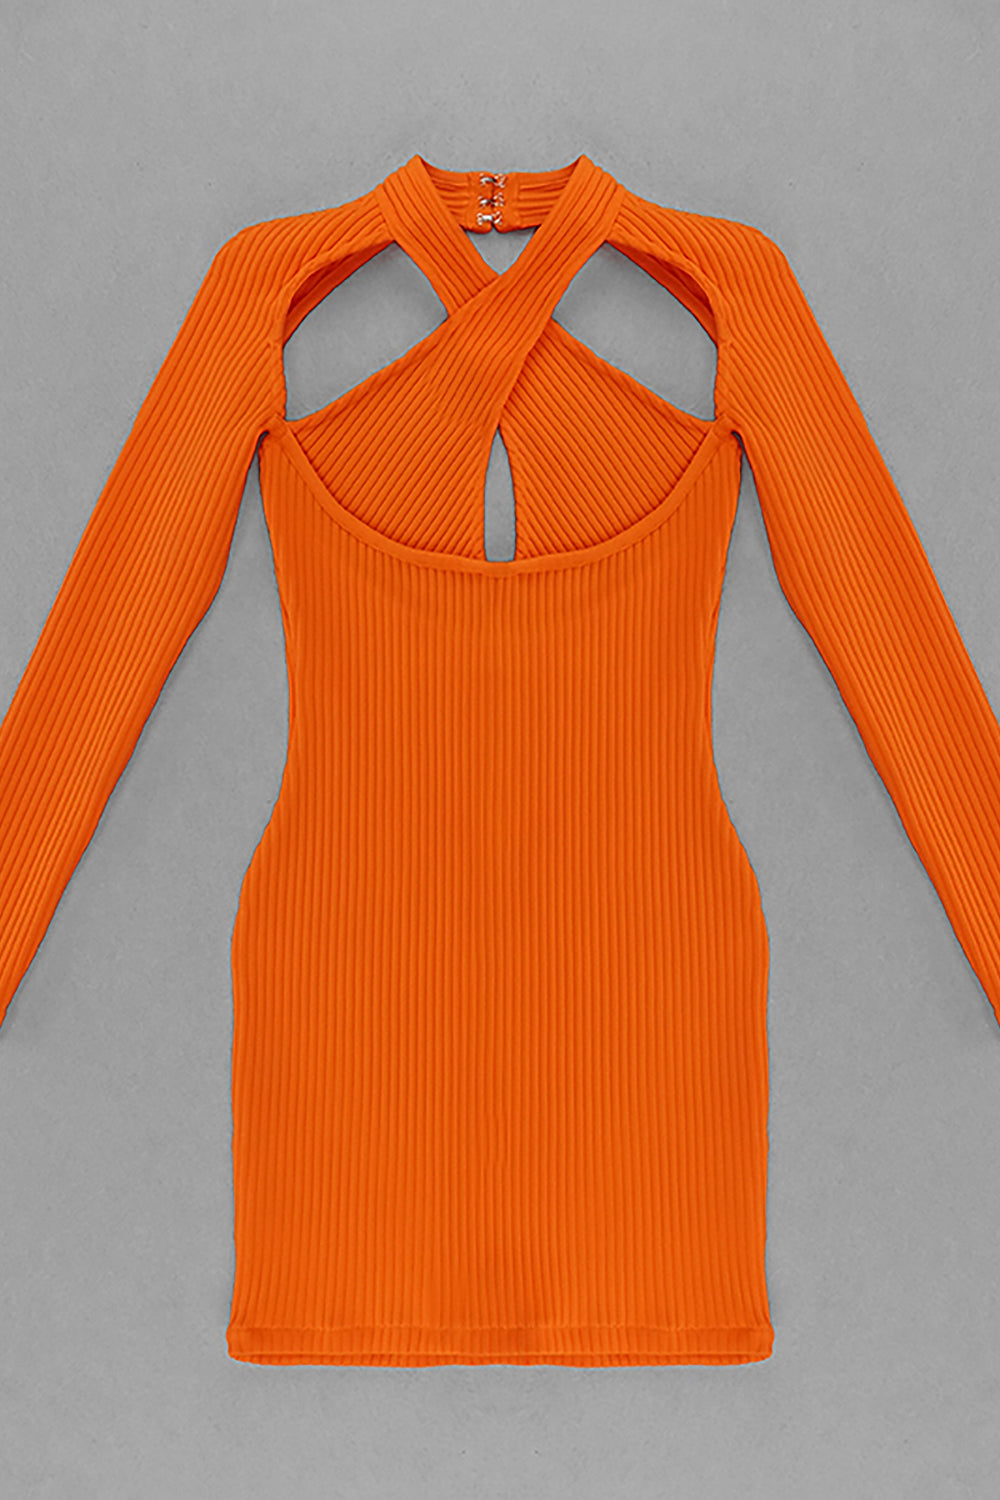 Orange Criss Cross Long Sleeve Hollow Out Bandage Dress